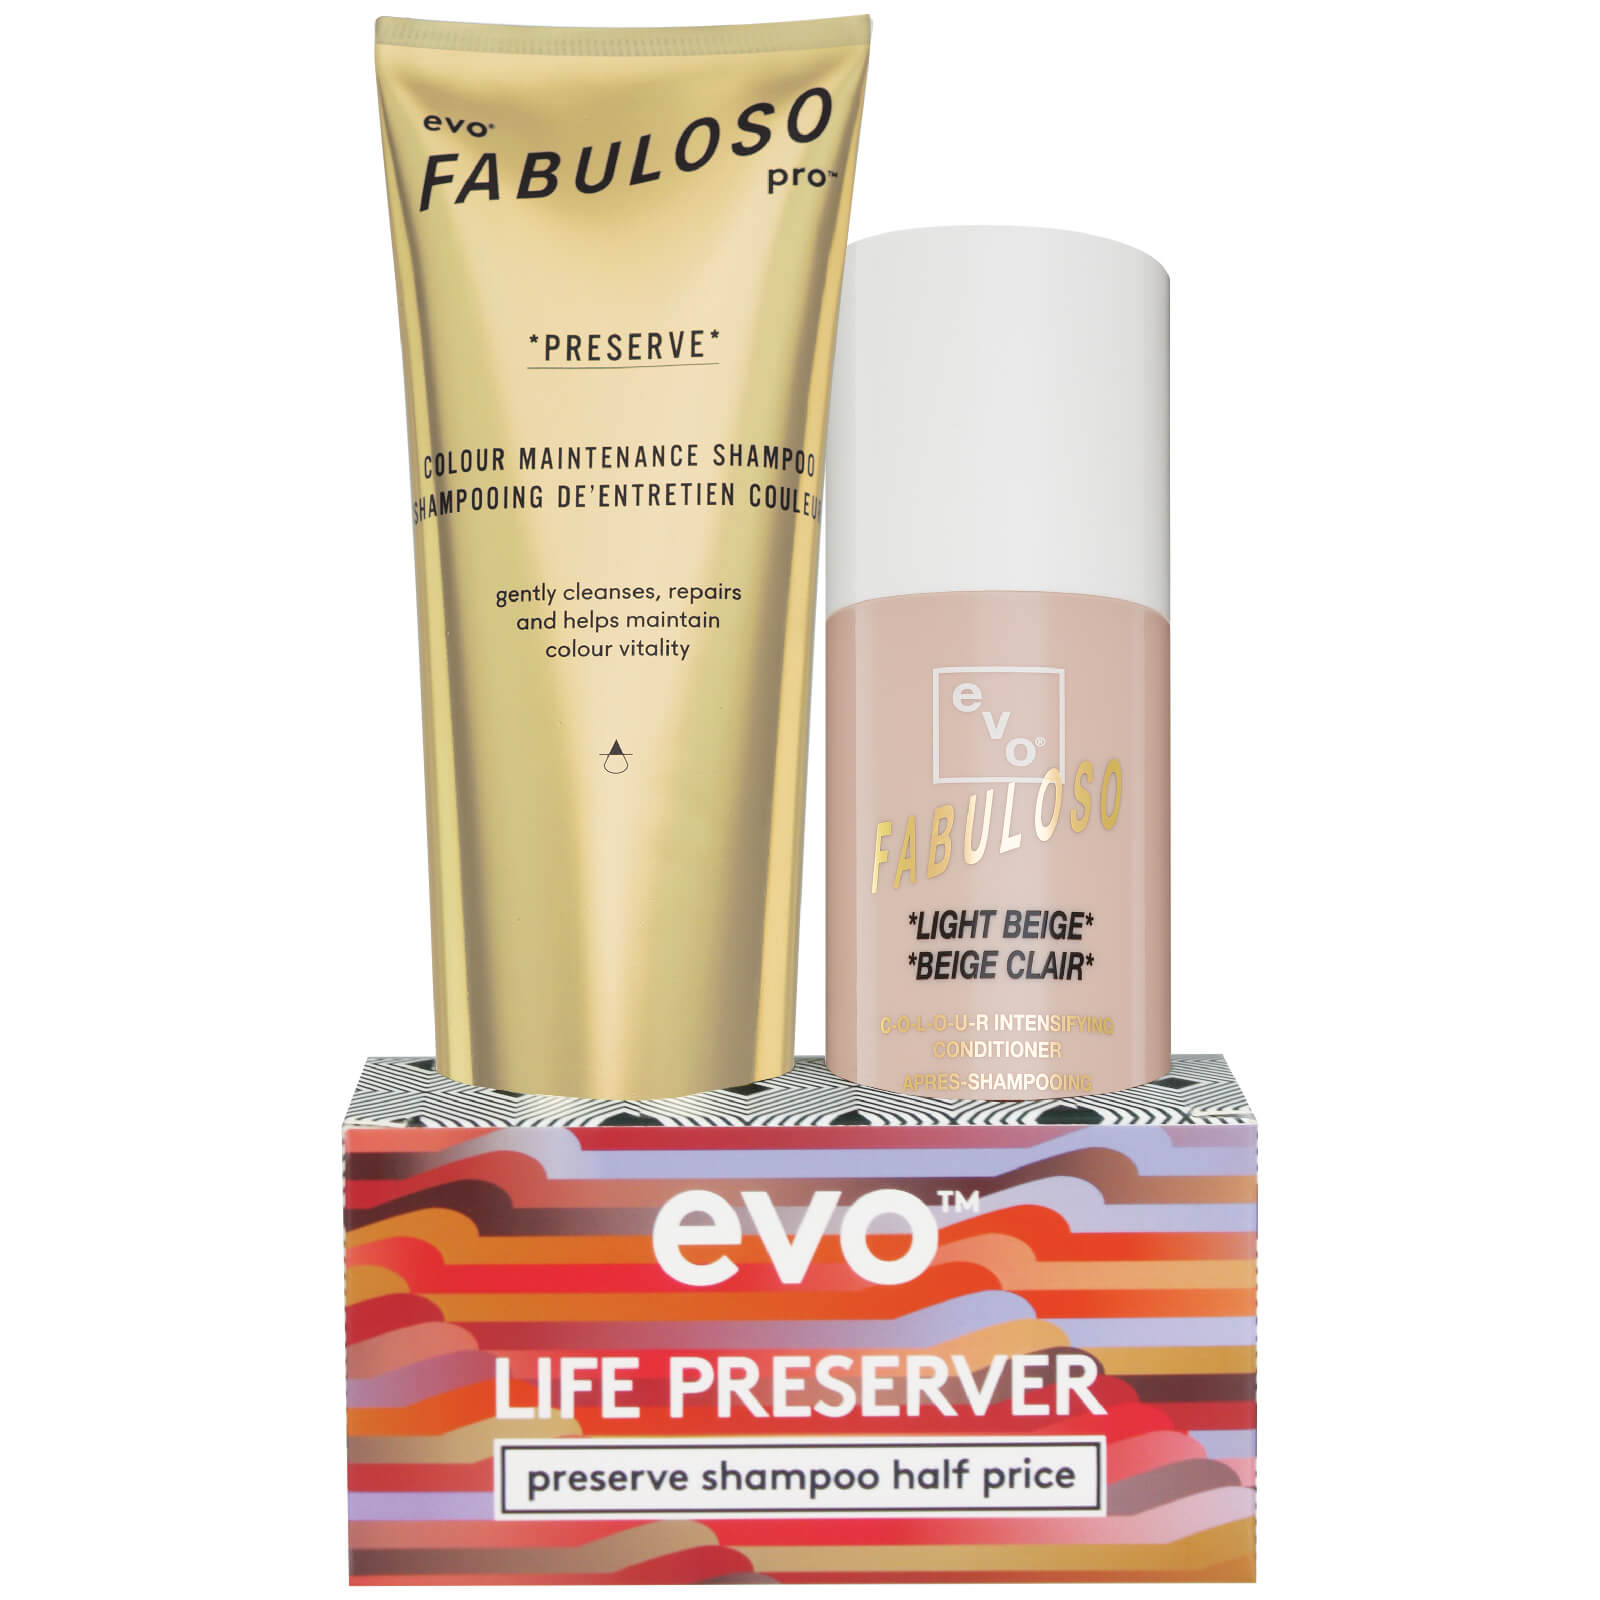 evo Fabuloso Life Preserver Shampoo Set